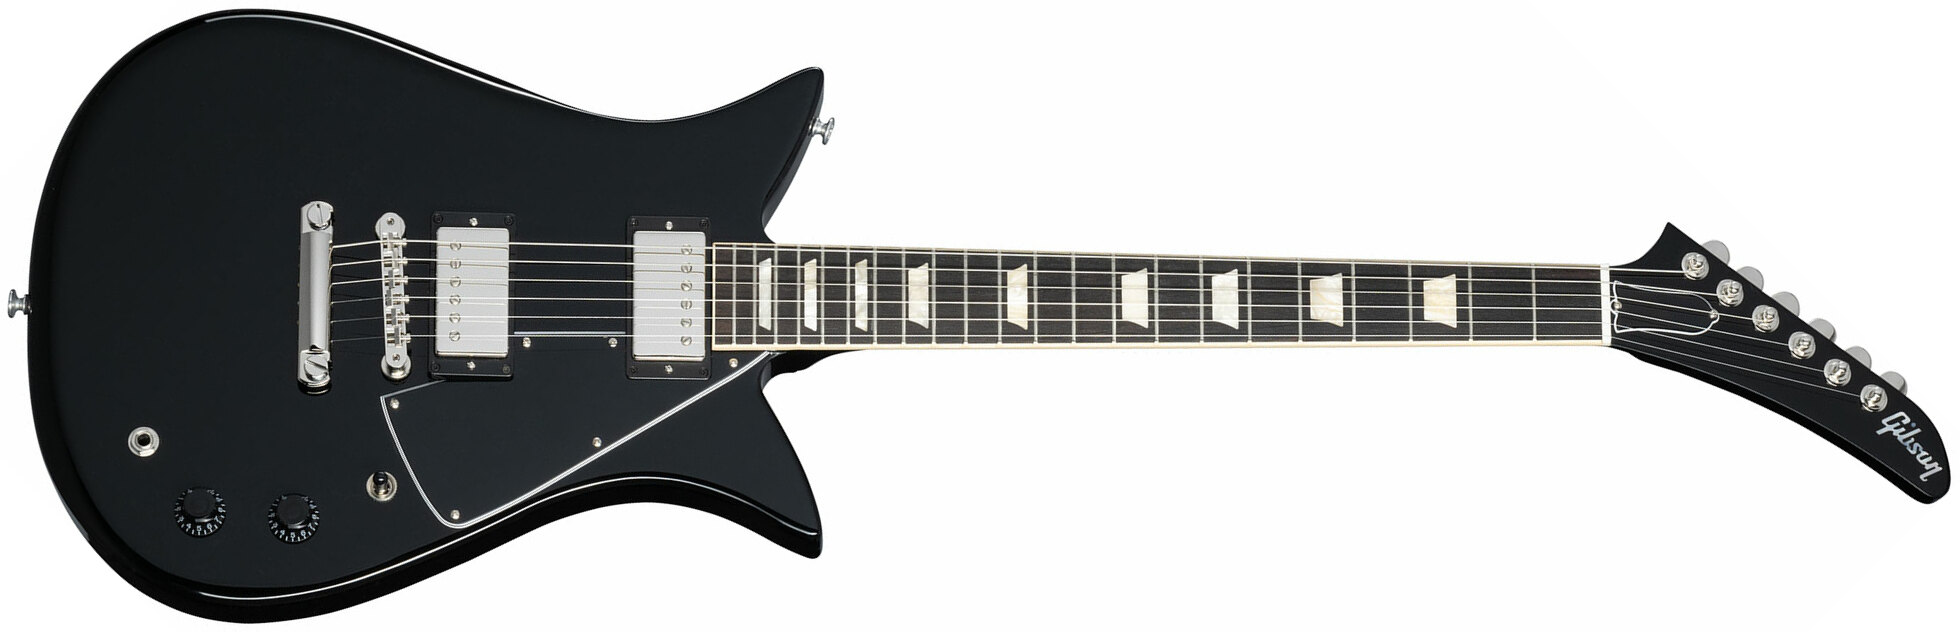 Gibson Theodore Standard Original 2h Ht Rw - Ebony - Retro rock electric guitar - Main picture